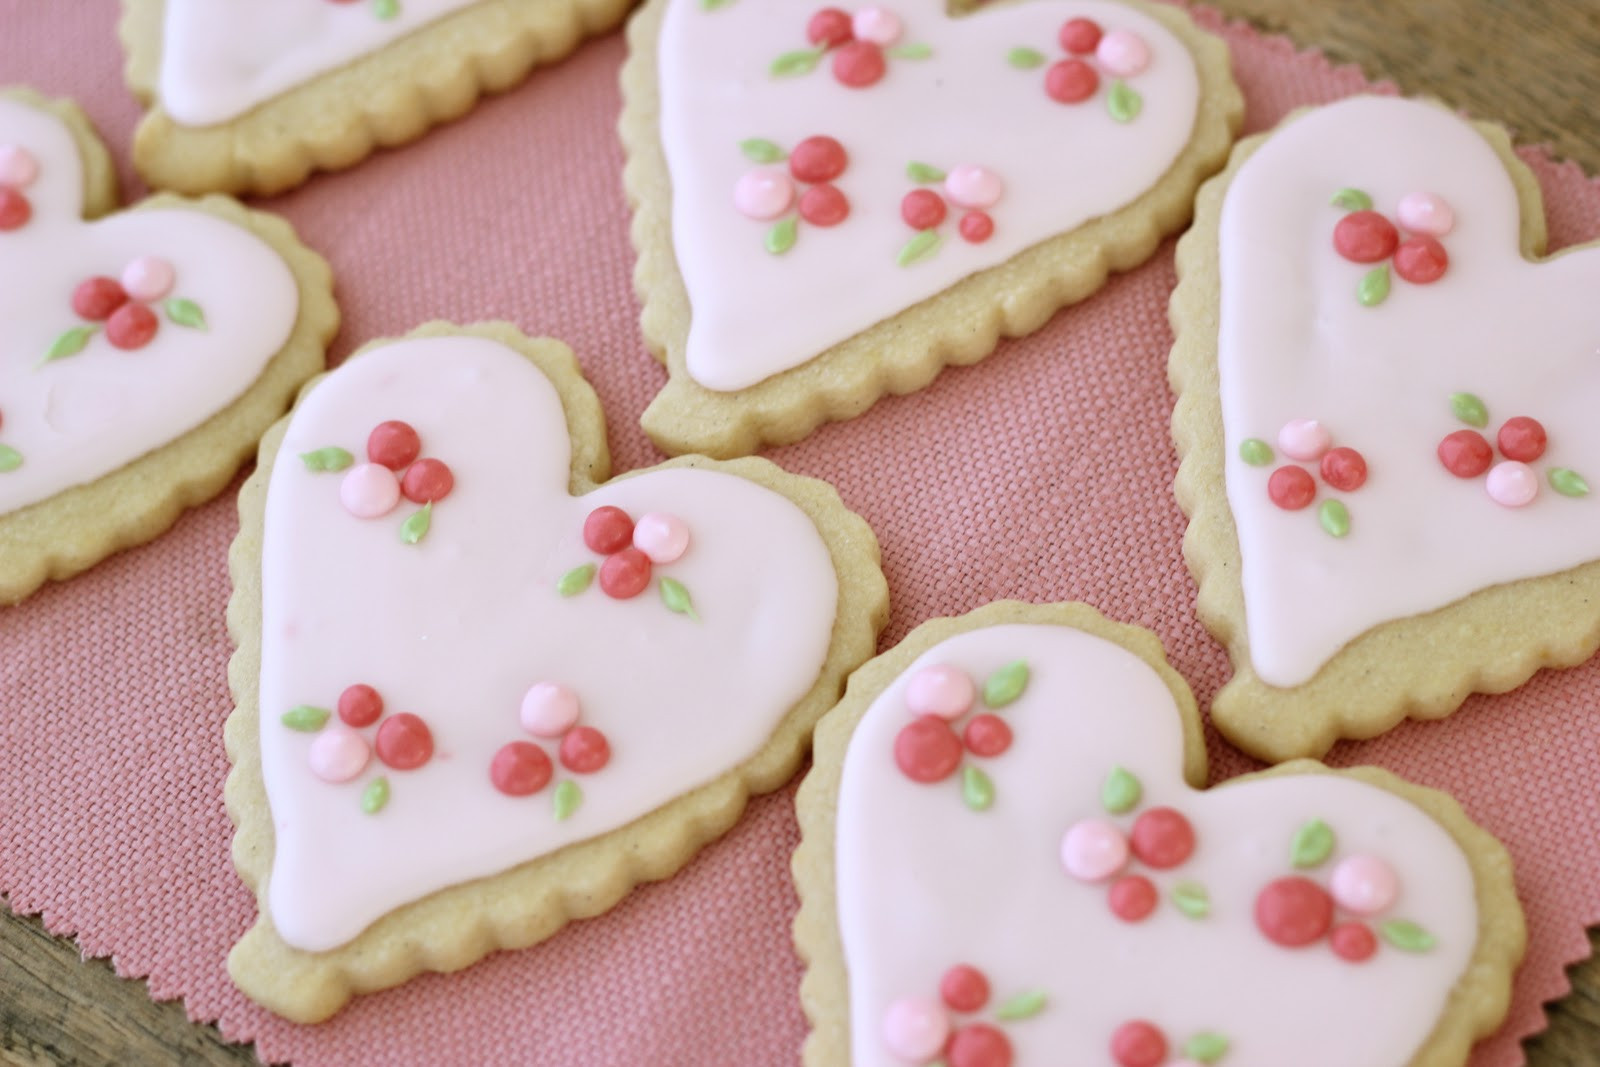 Decorating Valentine Sugar Cookies
 Jenny Steffens Hobick Valentine s Day Sugar Cookies